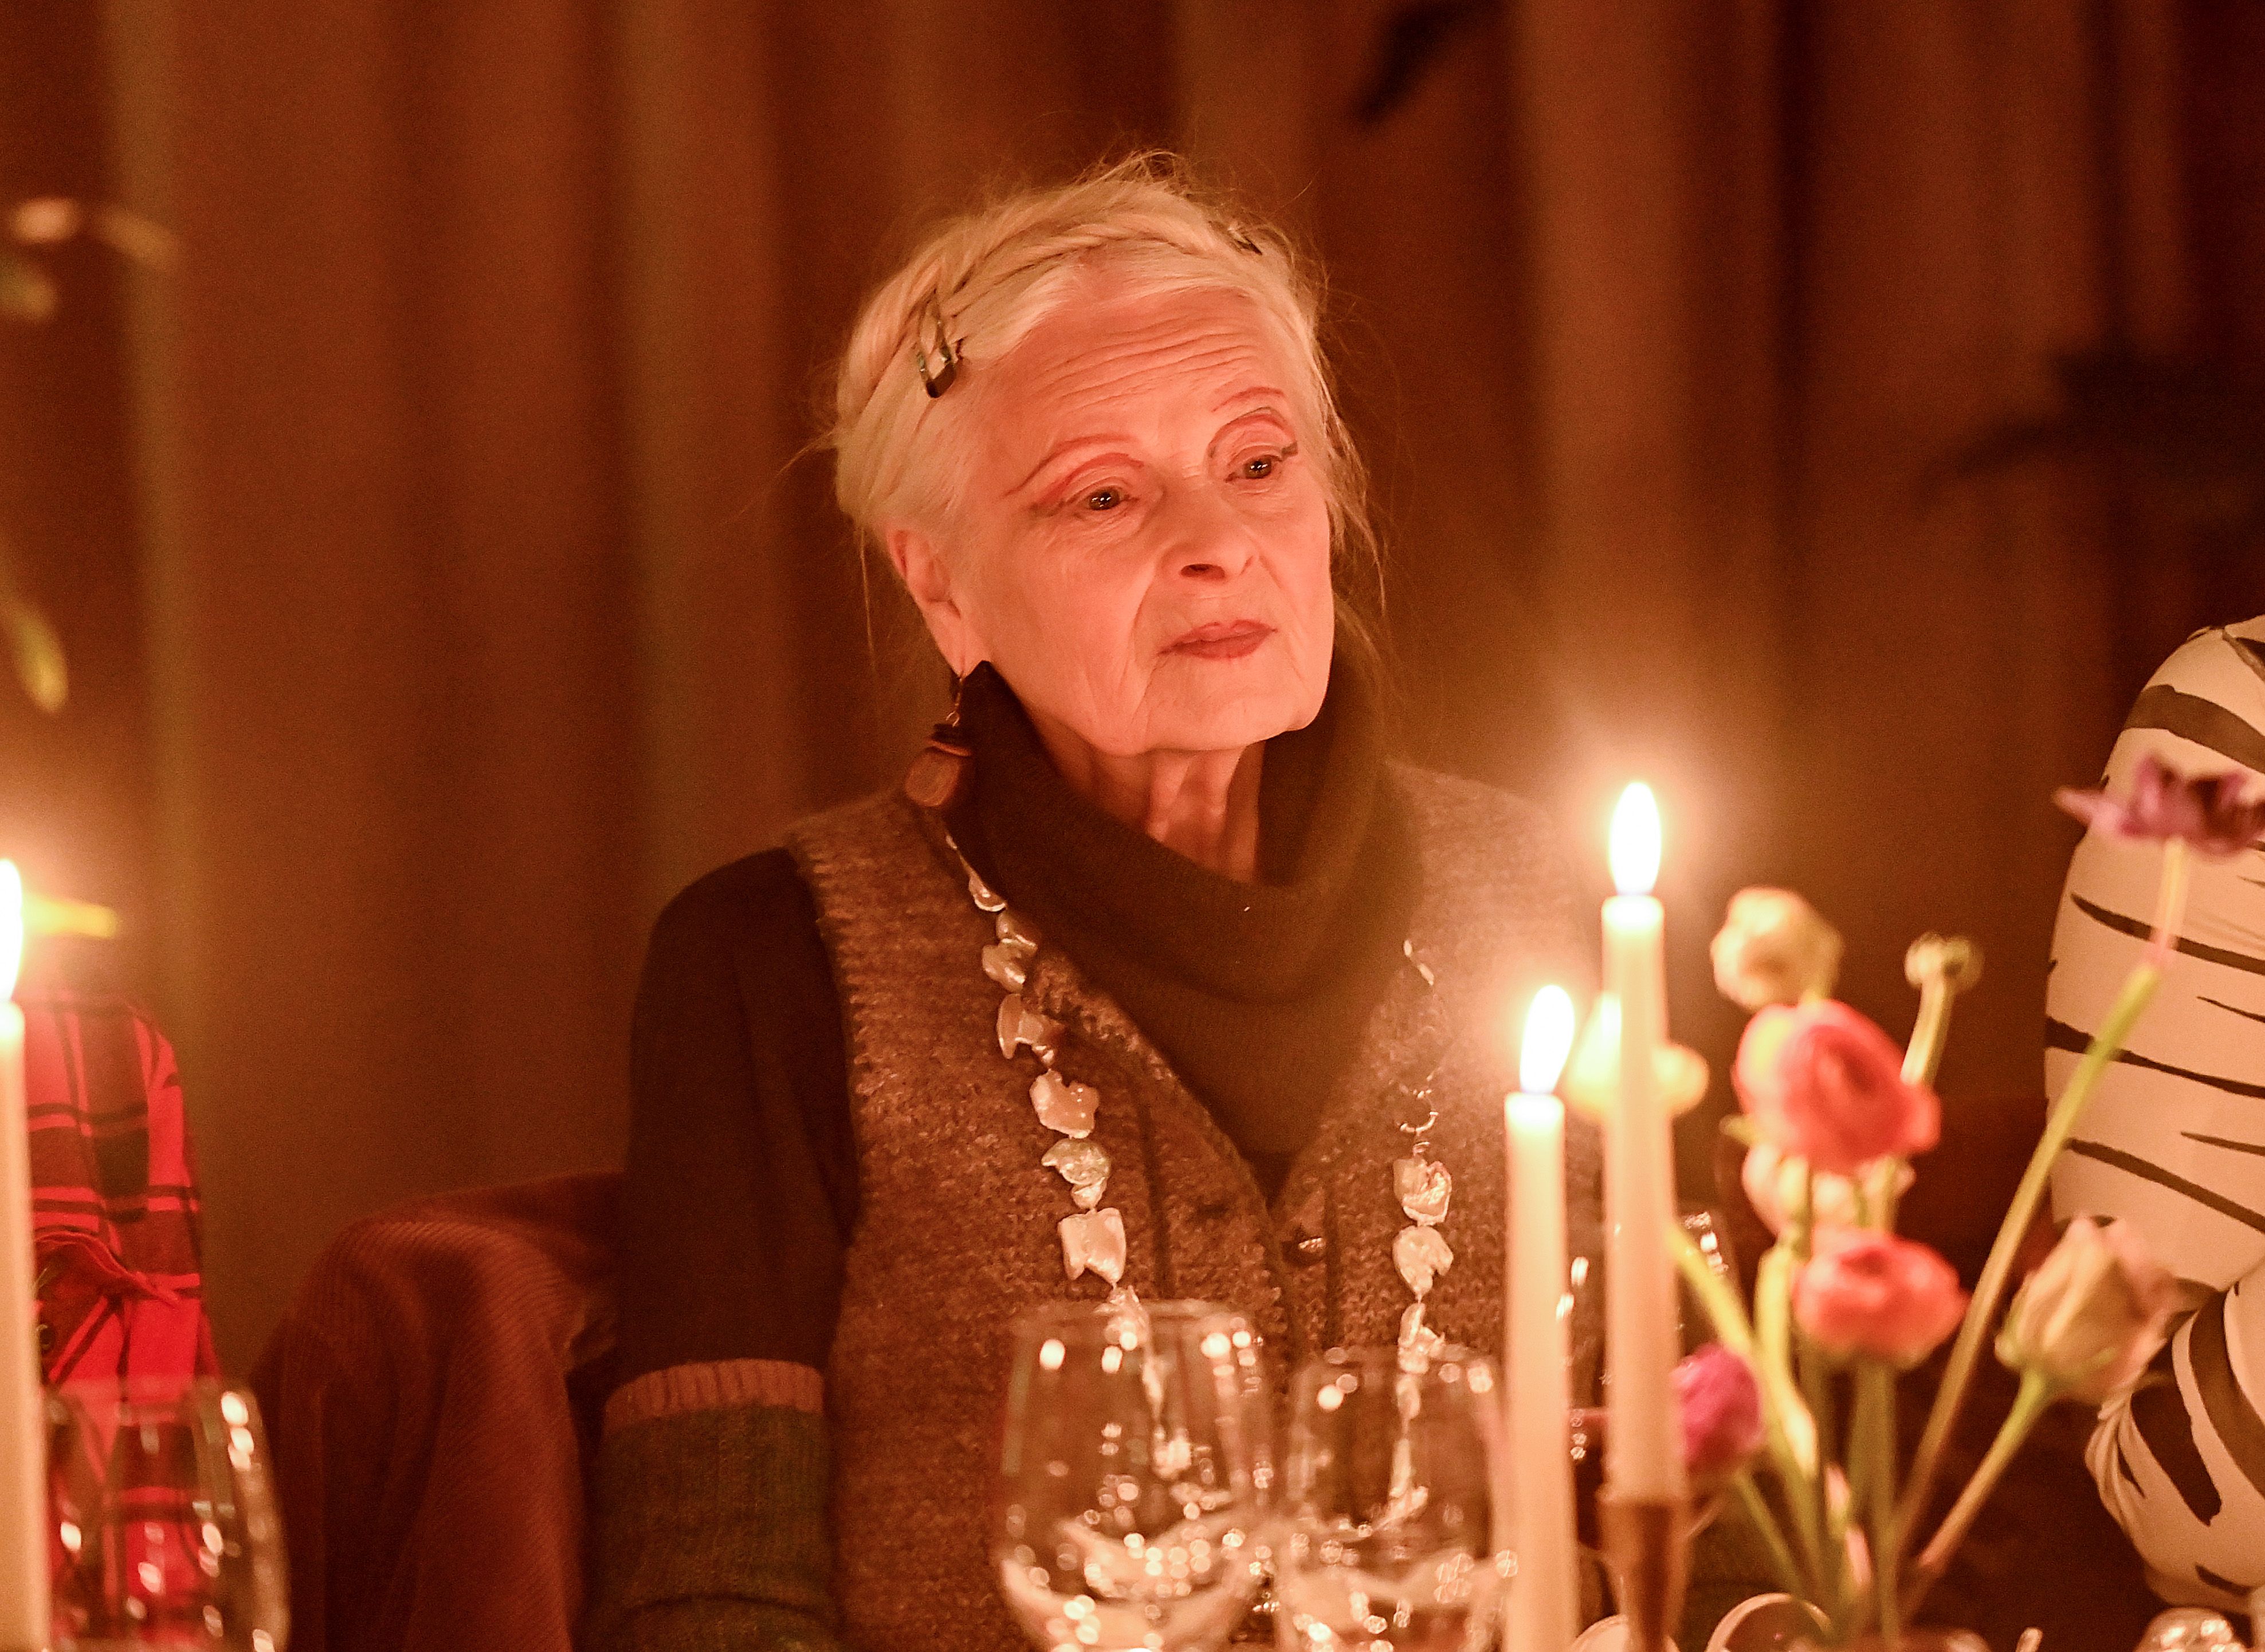 Vivienne Westwood, Legendary Fashion Designer, Dead at 81